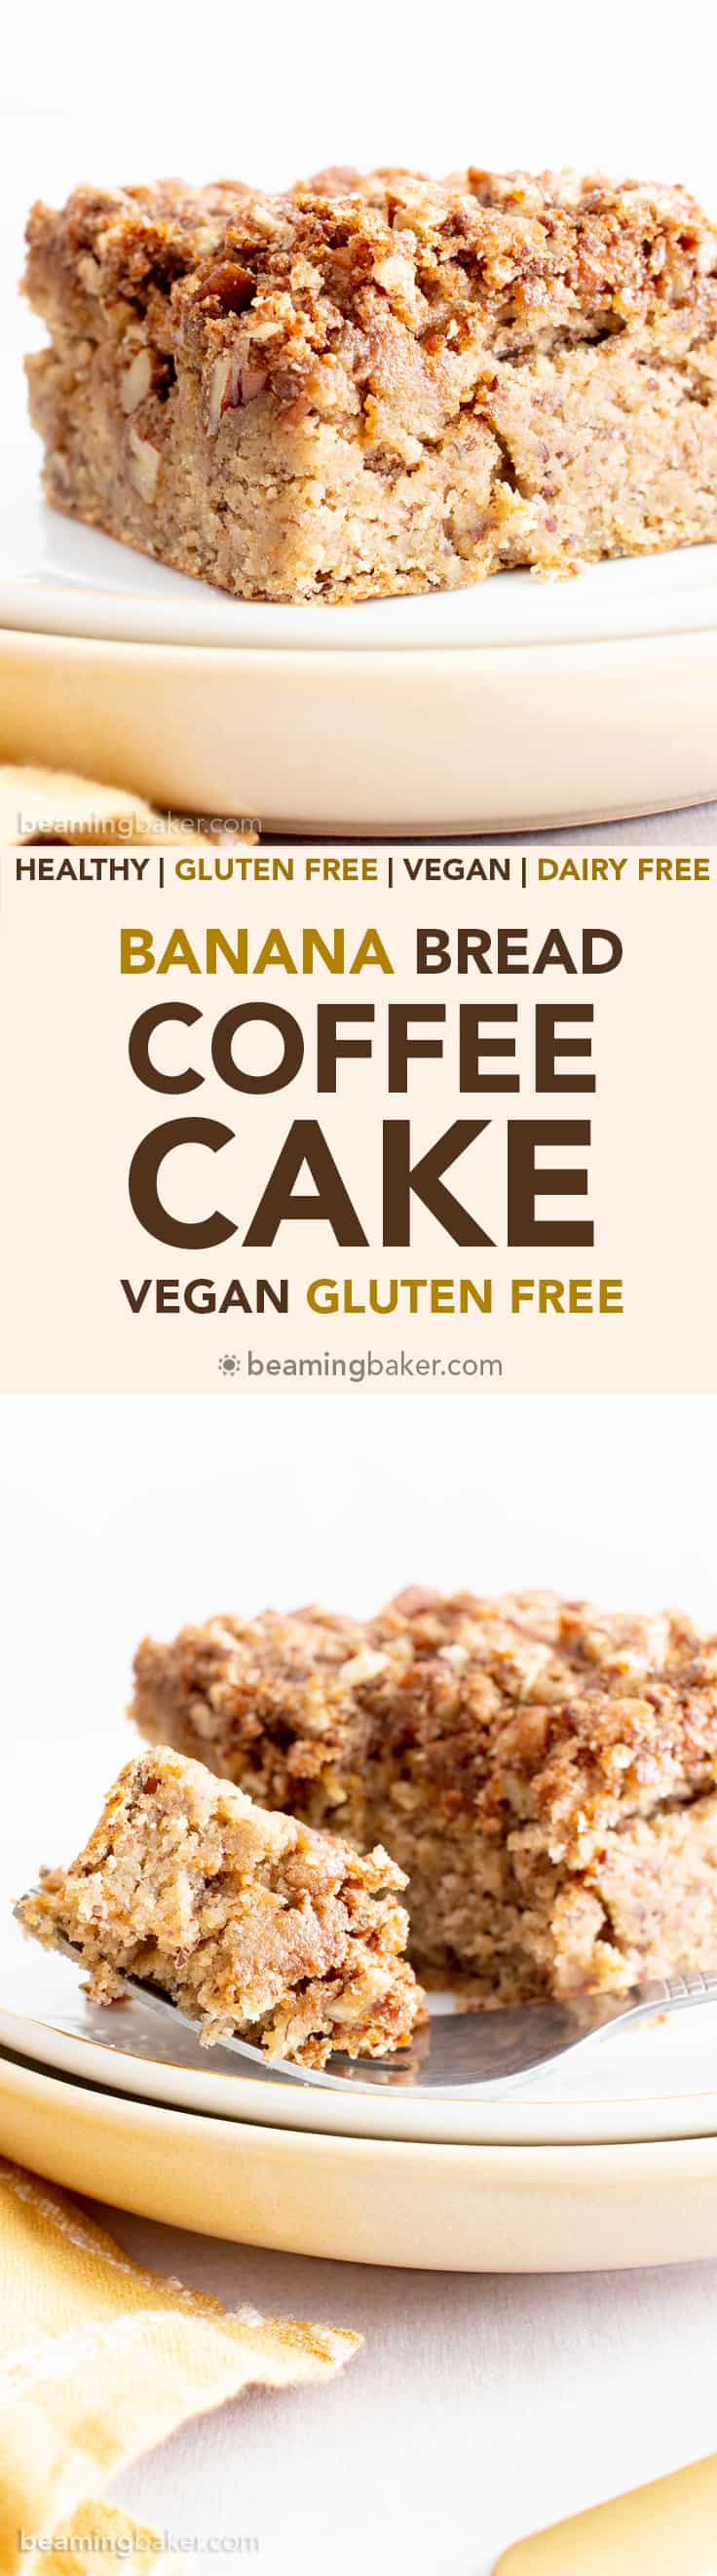 Vegan Gluten Free Banana Bread Coffee Cake Recipe (V, GF): this moist ‘n healthy vegan banana coffee cake recipe is easy & gluten free, with streusel topping! #Vegan #Banana #CoffeeCake #GlutenFree #Healthy | Recipe at BeamingBaker.com